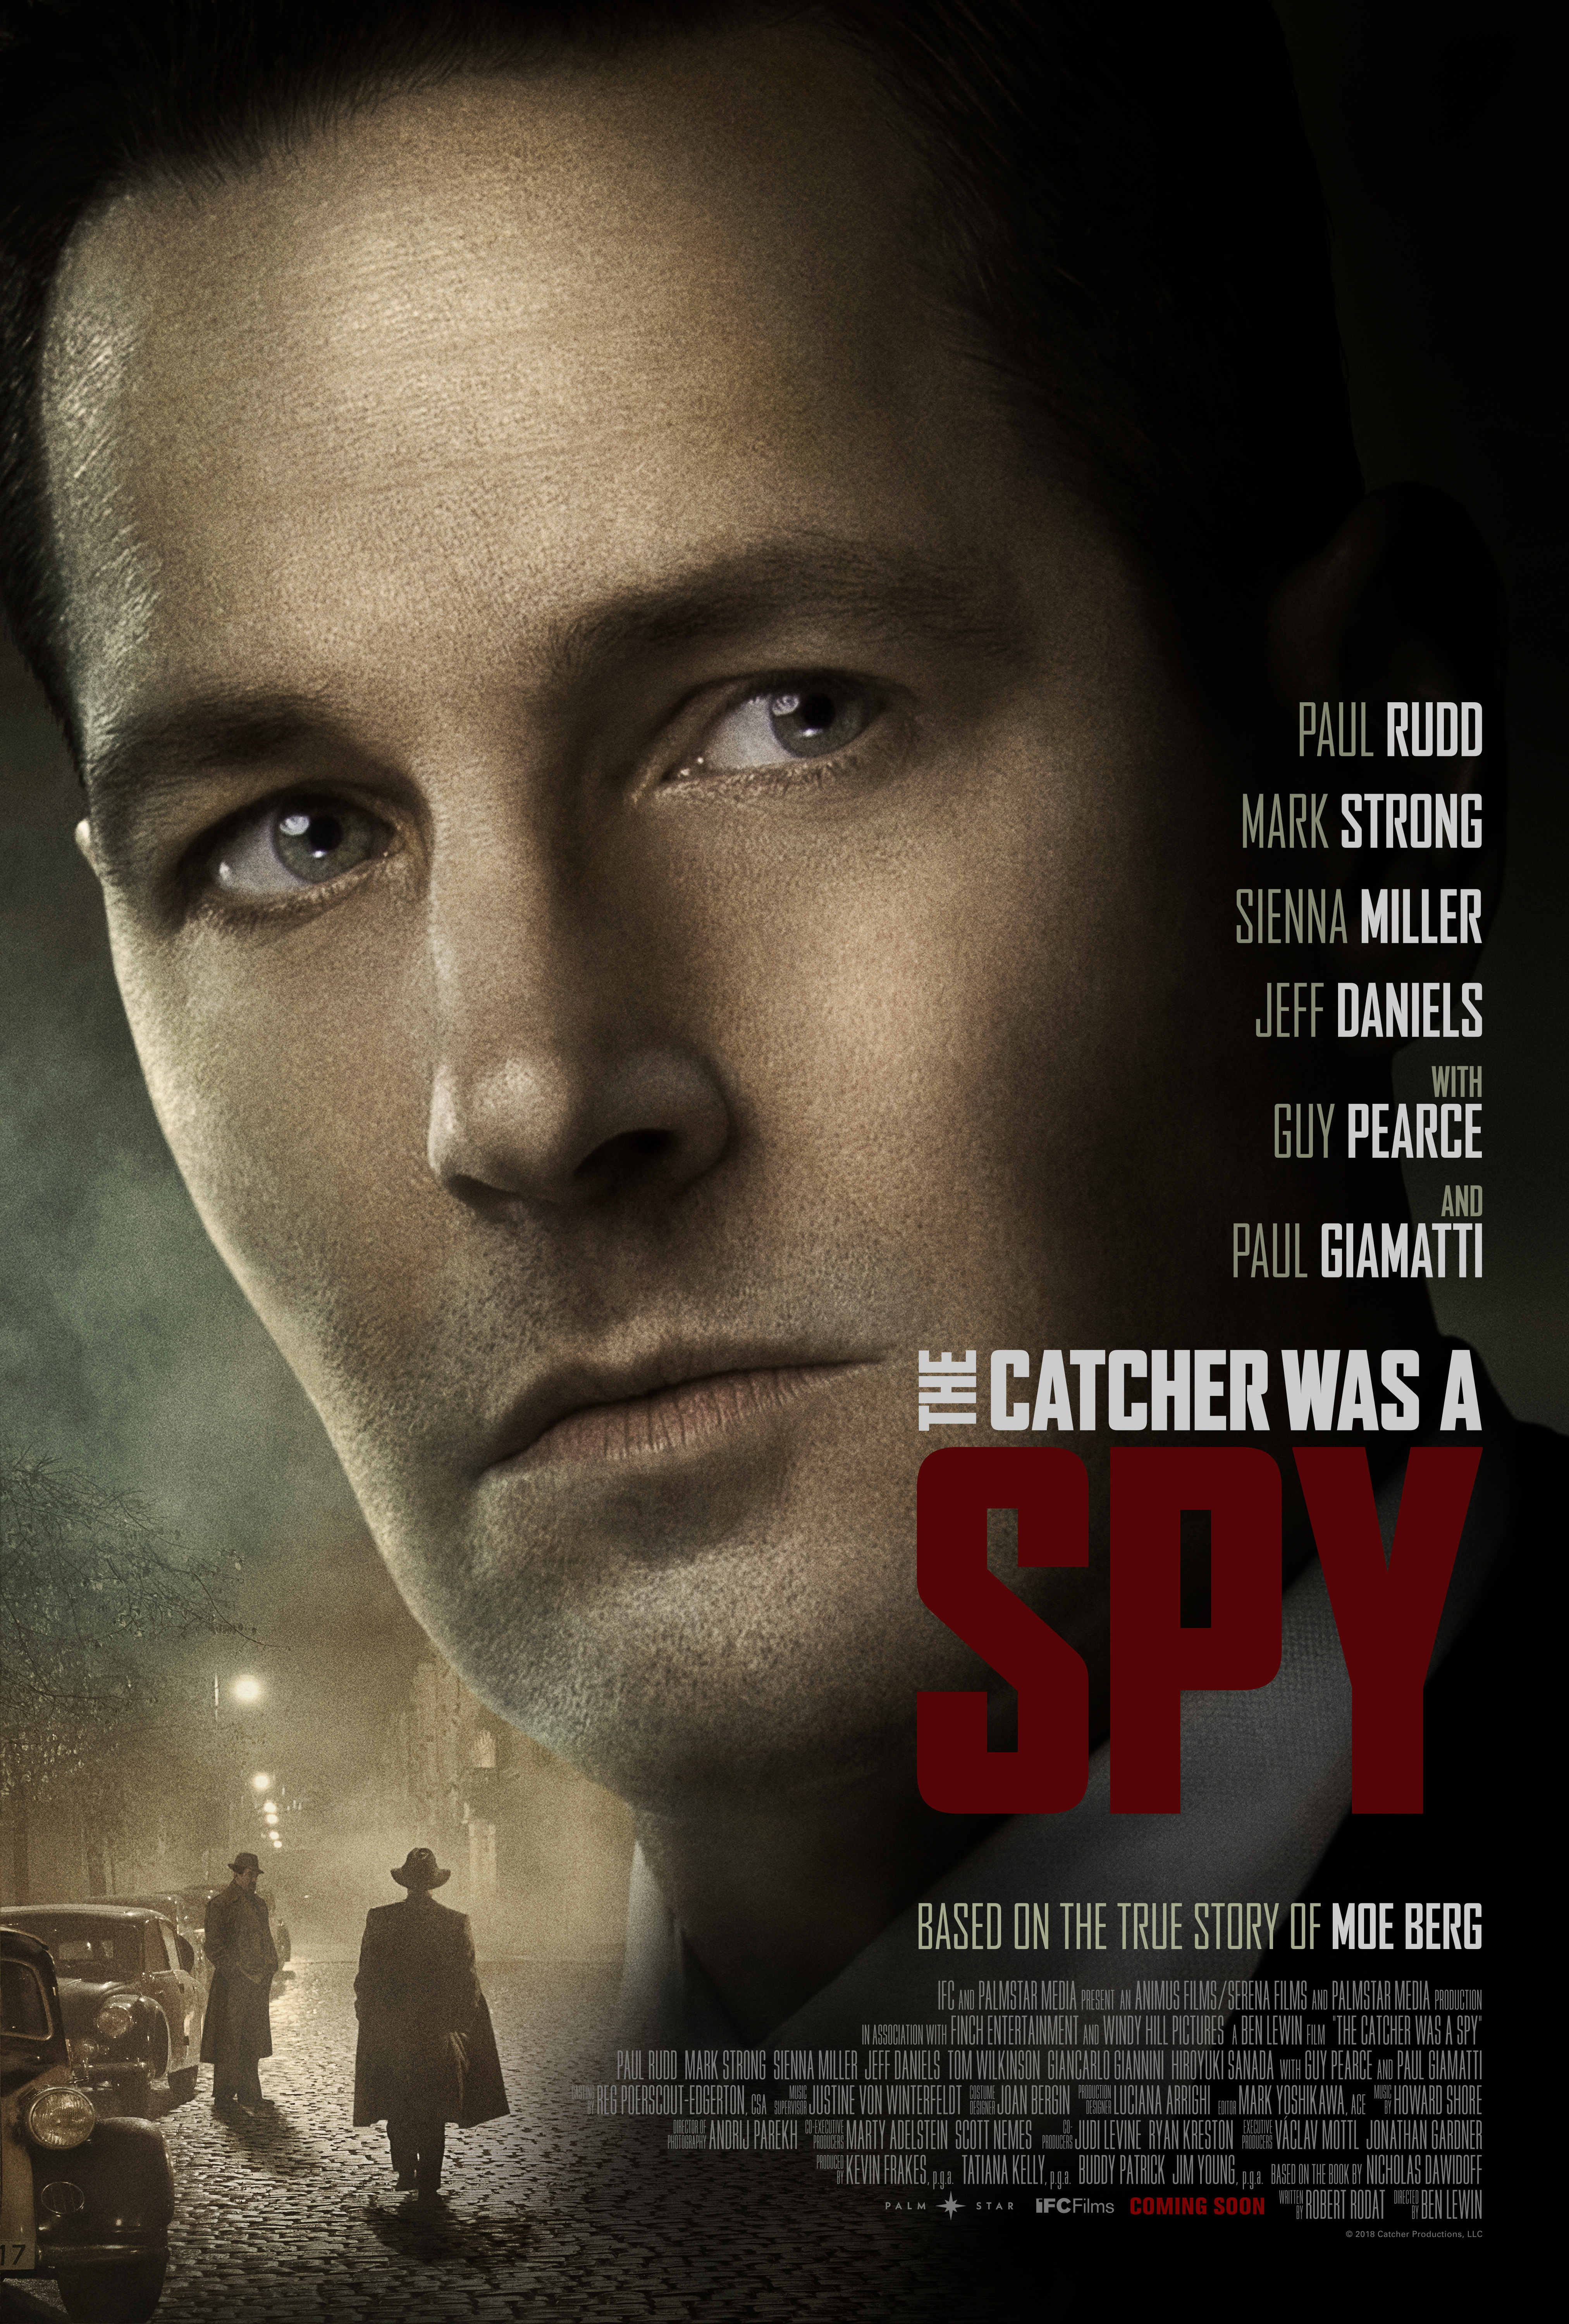 Nonton film The Catcher Was a Spy layarkaca21 indoxx1 ganool online streaming terbaru